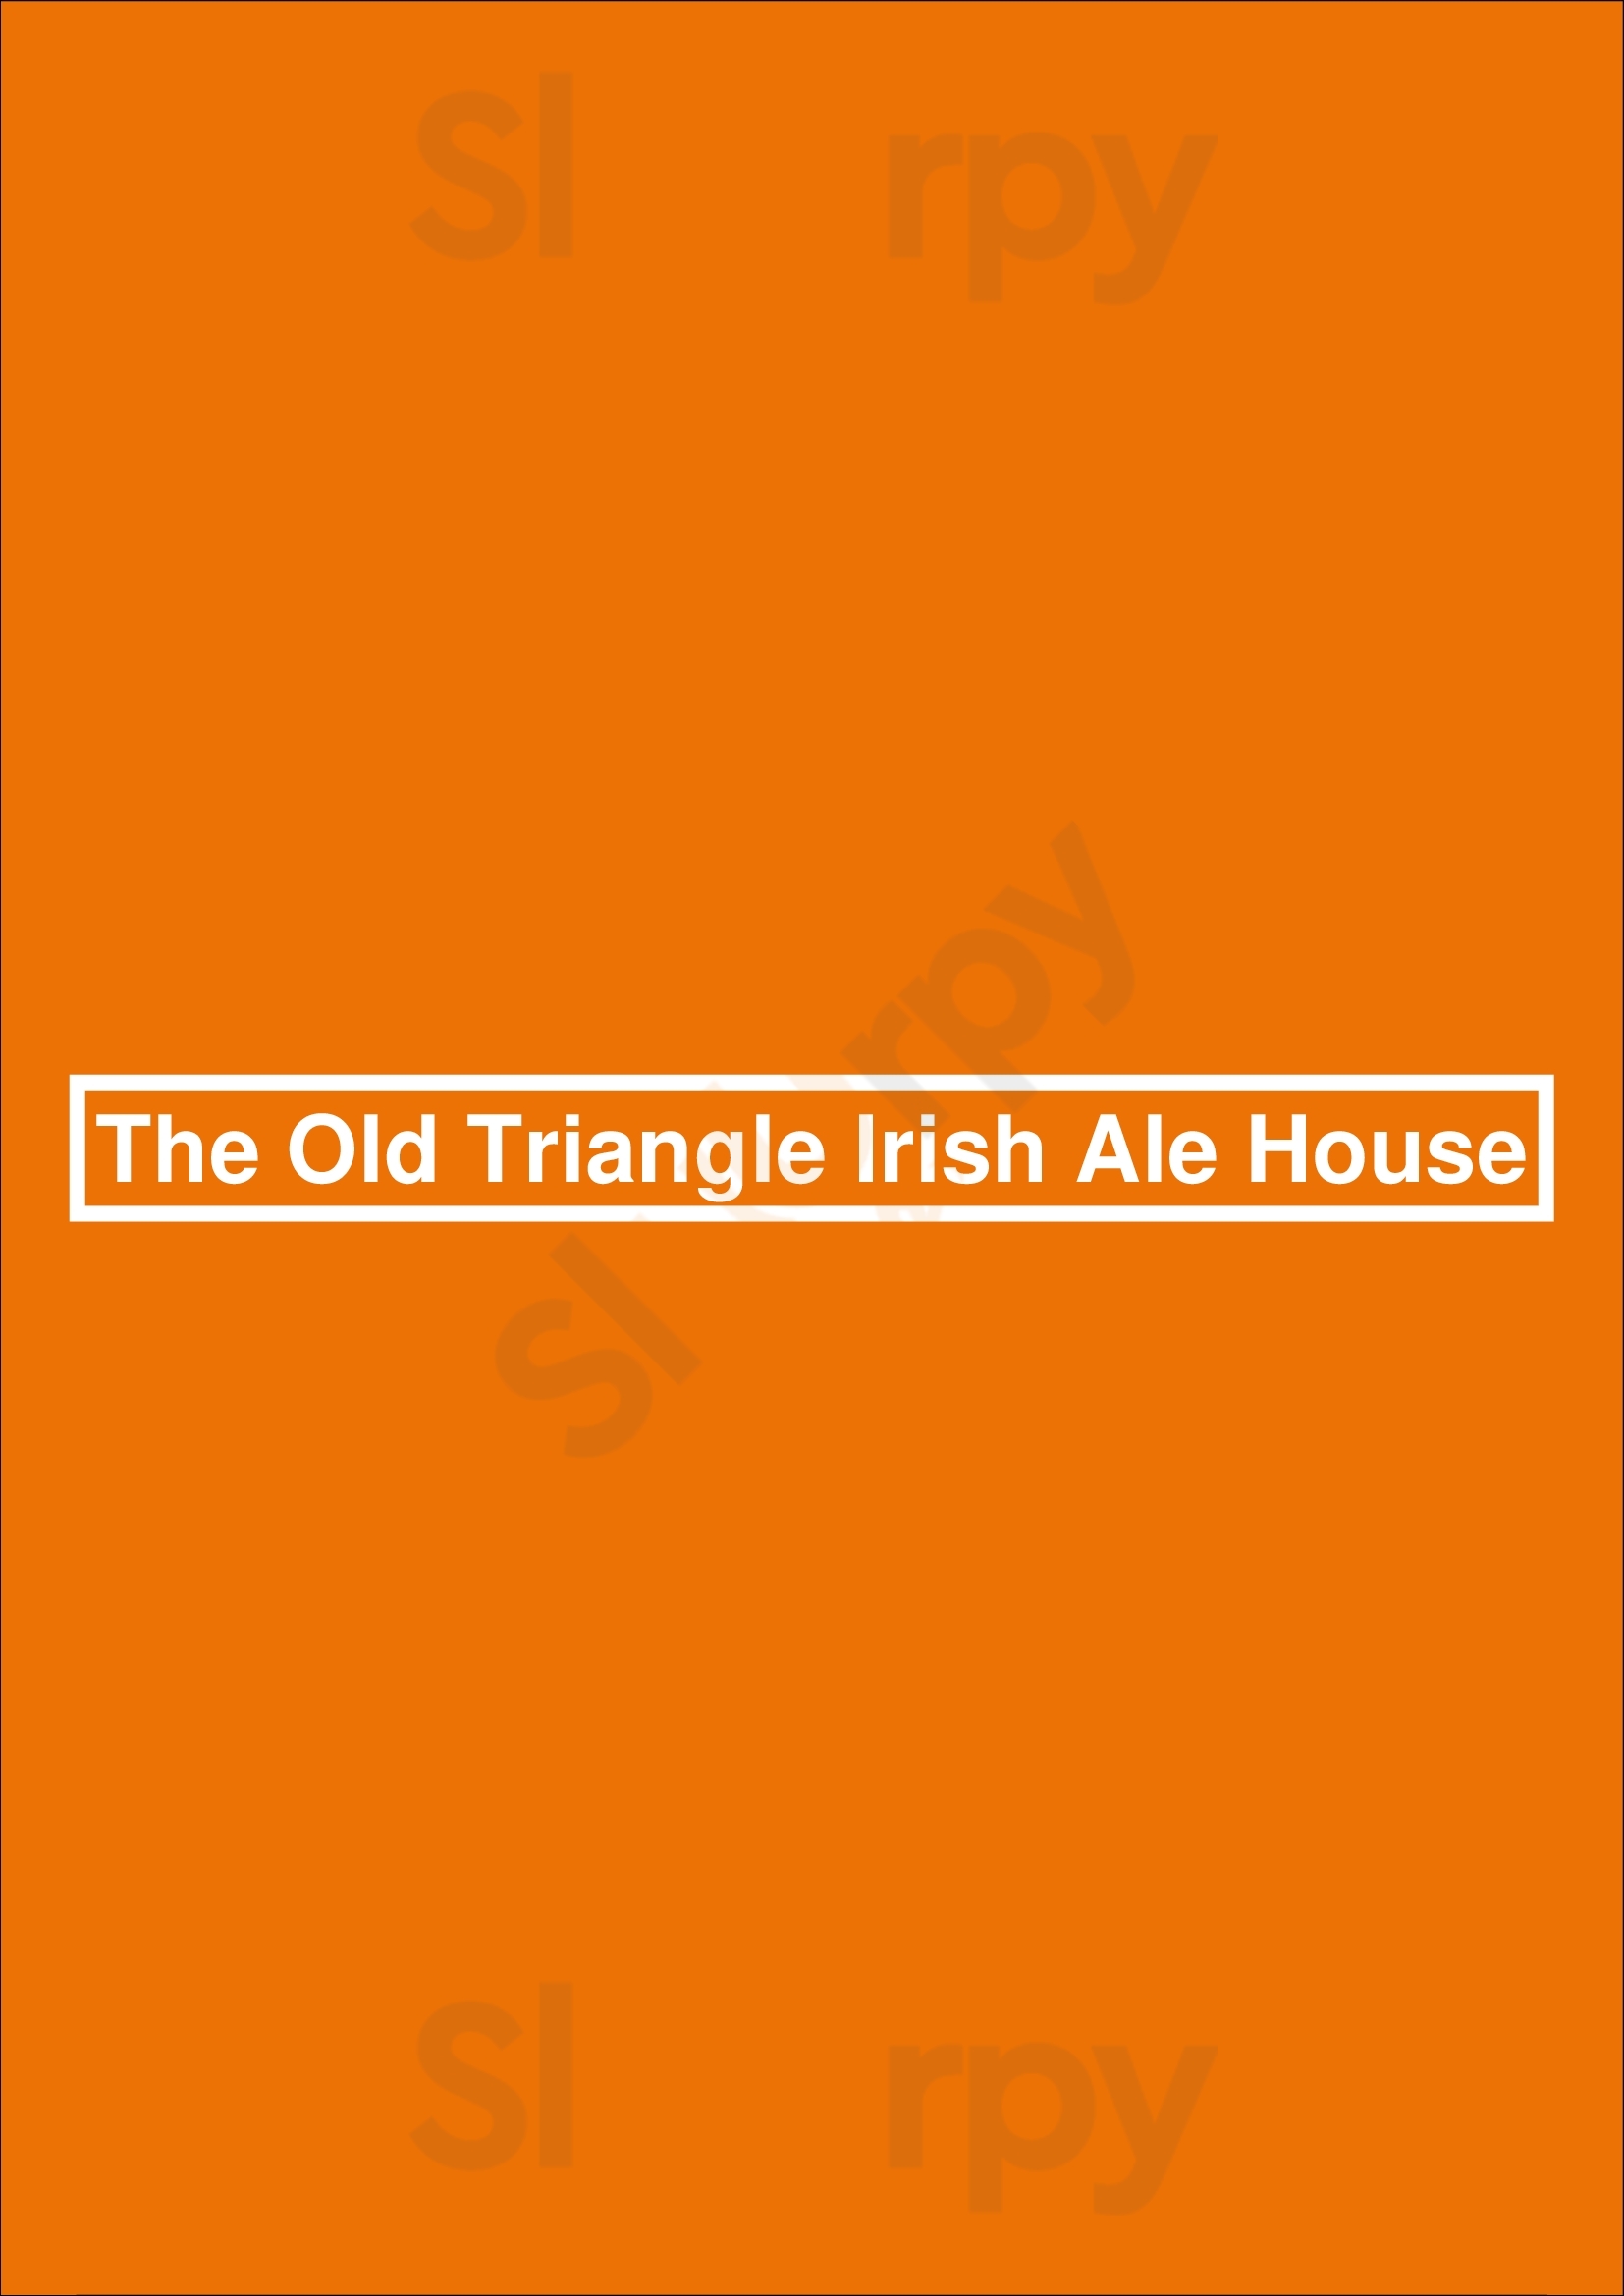 The Old Triangle Irish Ale House Halifax Menu - 1